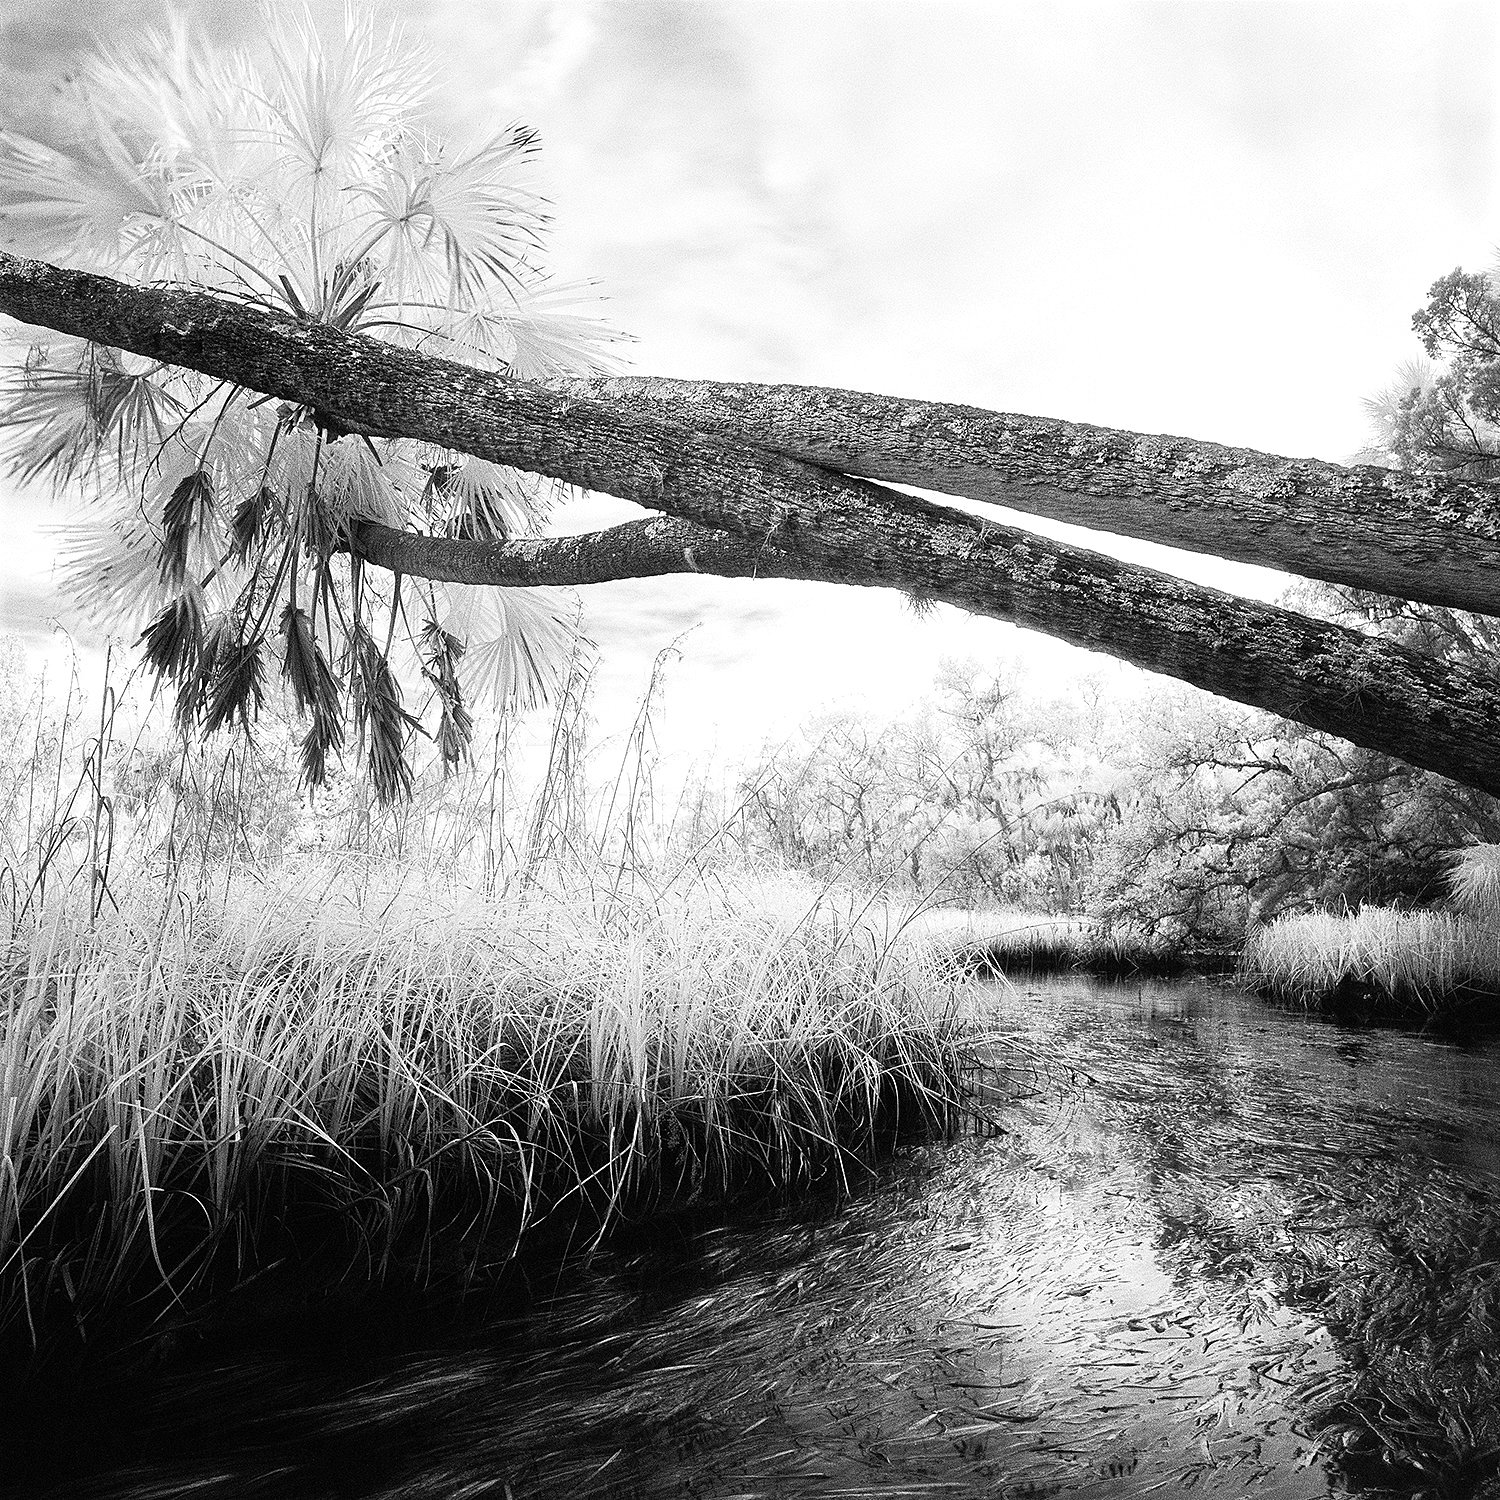 Horizontal Palms & Creek, 2004